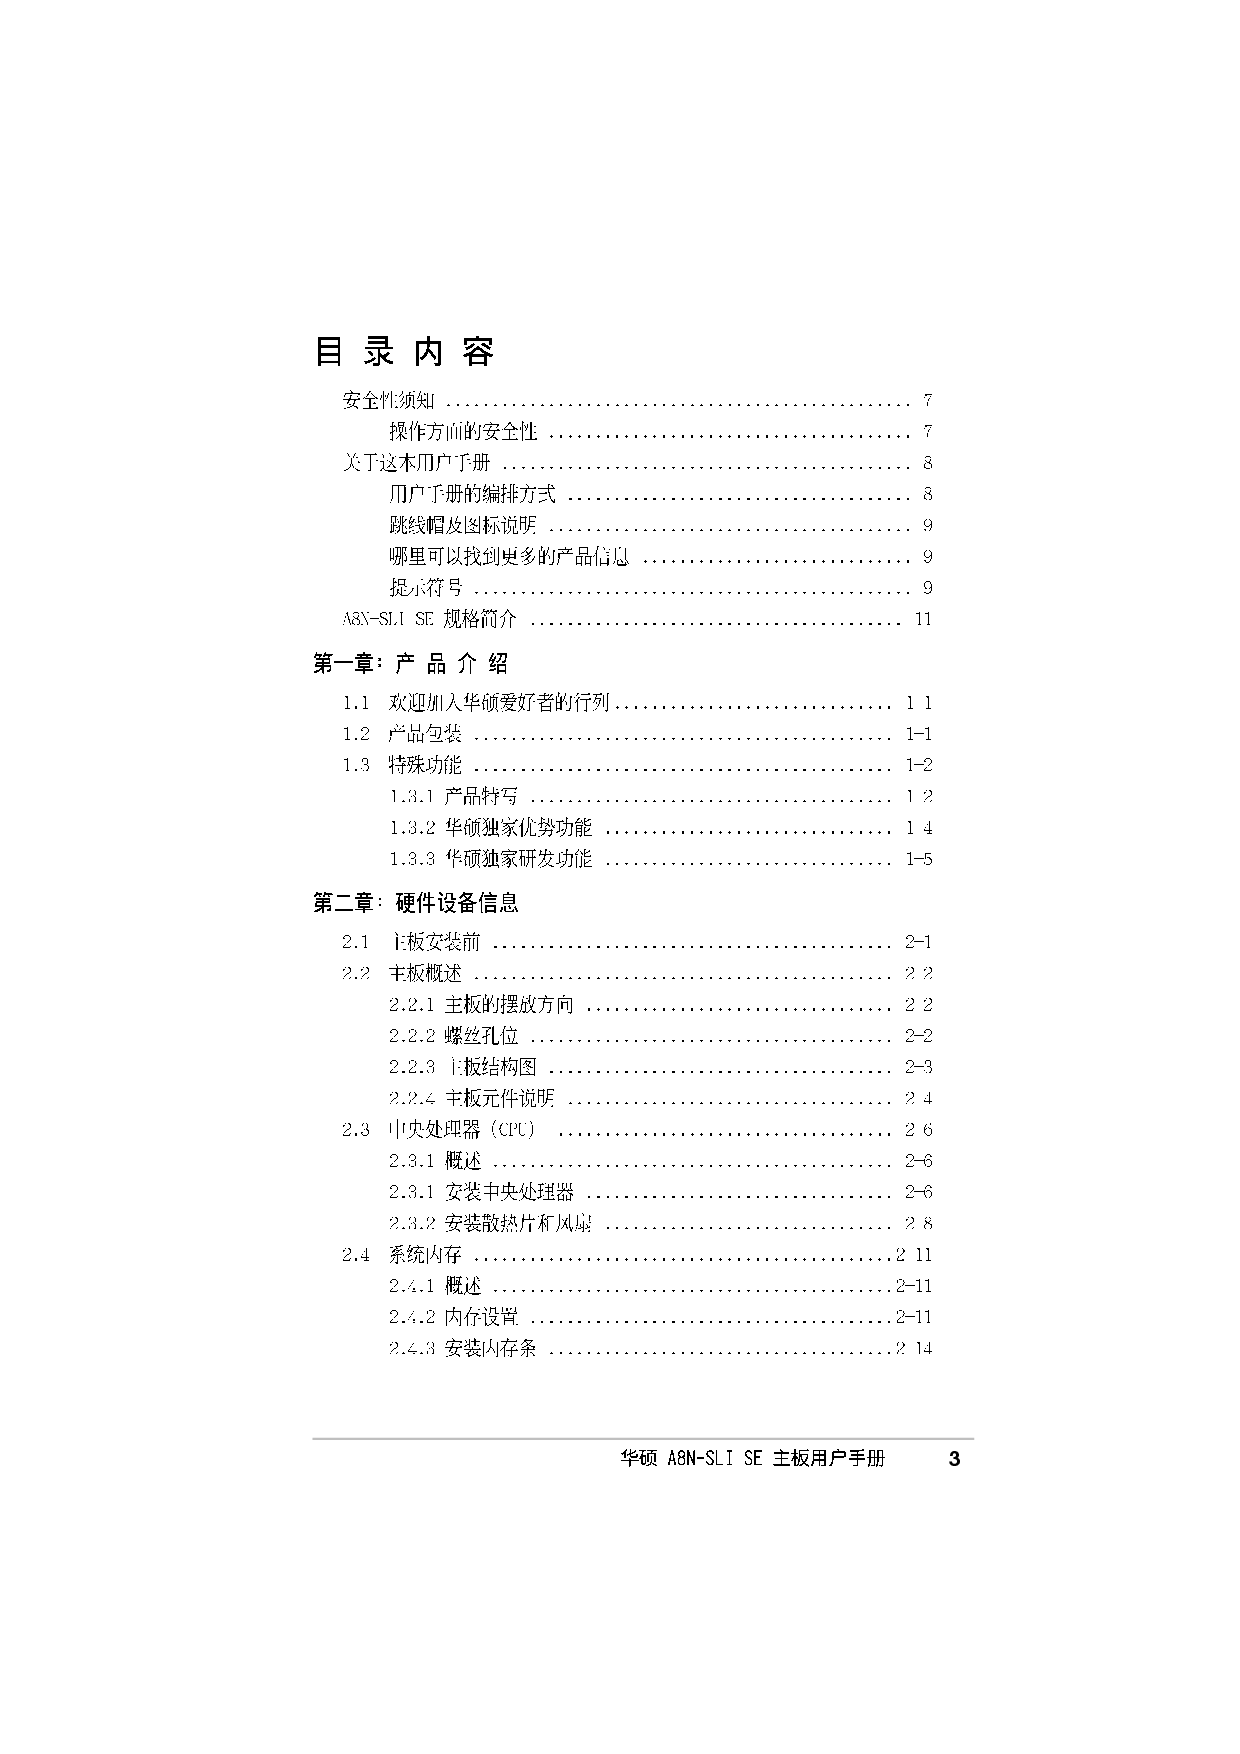 华硕 Asus A8N-SLI SE 用户手册 第2页